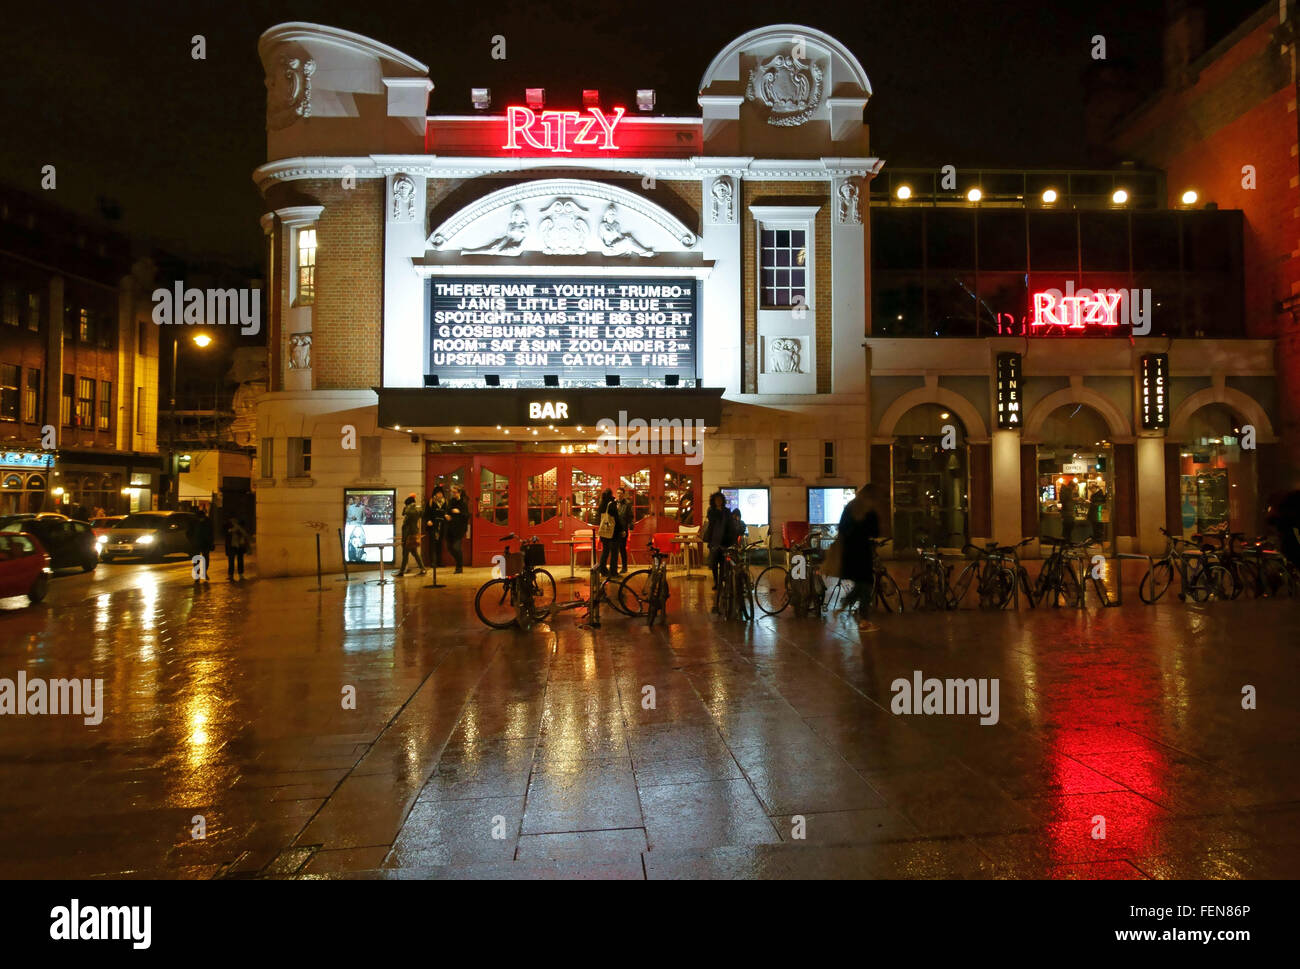 Ritzy Cinema in Brixton, South London Stock Photo